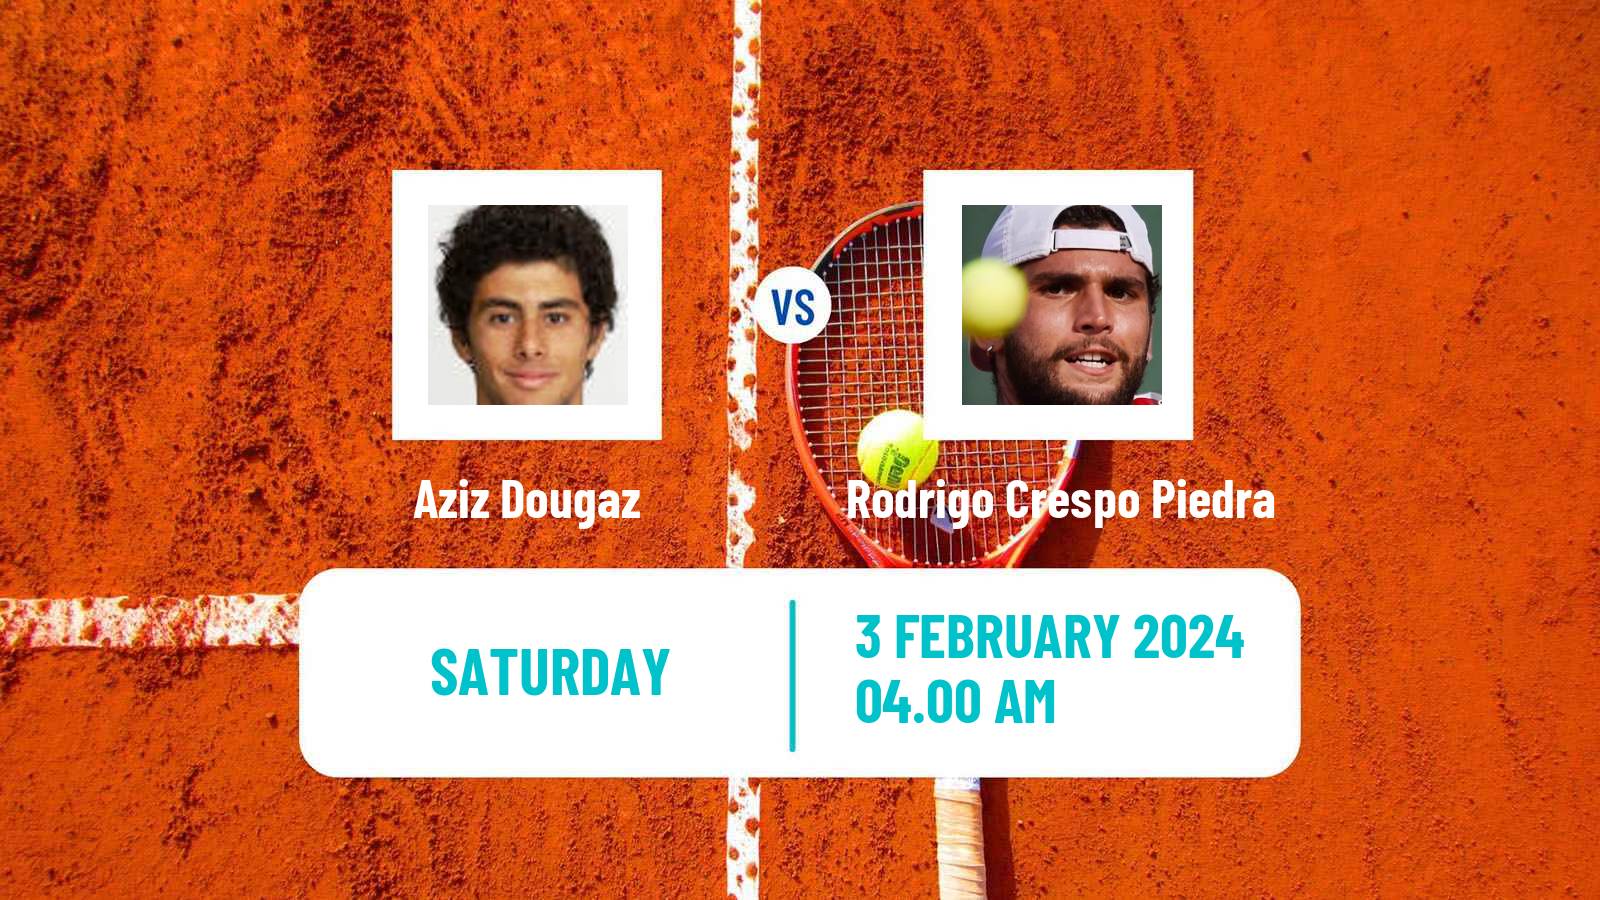 Tennis Davis Cup World Group II Aziz Dougaz - Rodrigo Crespo Piedra